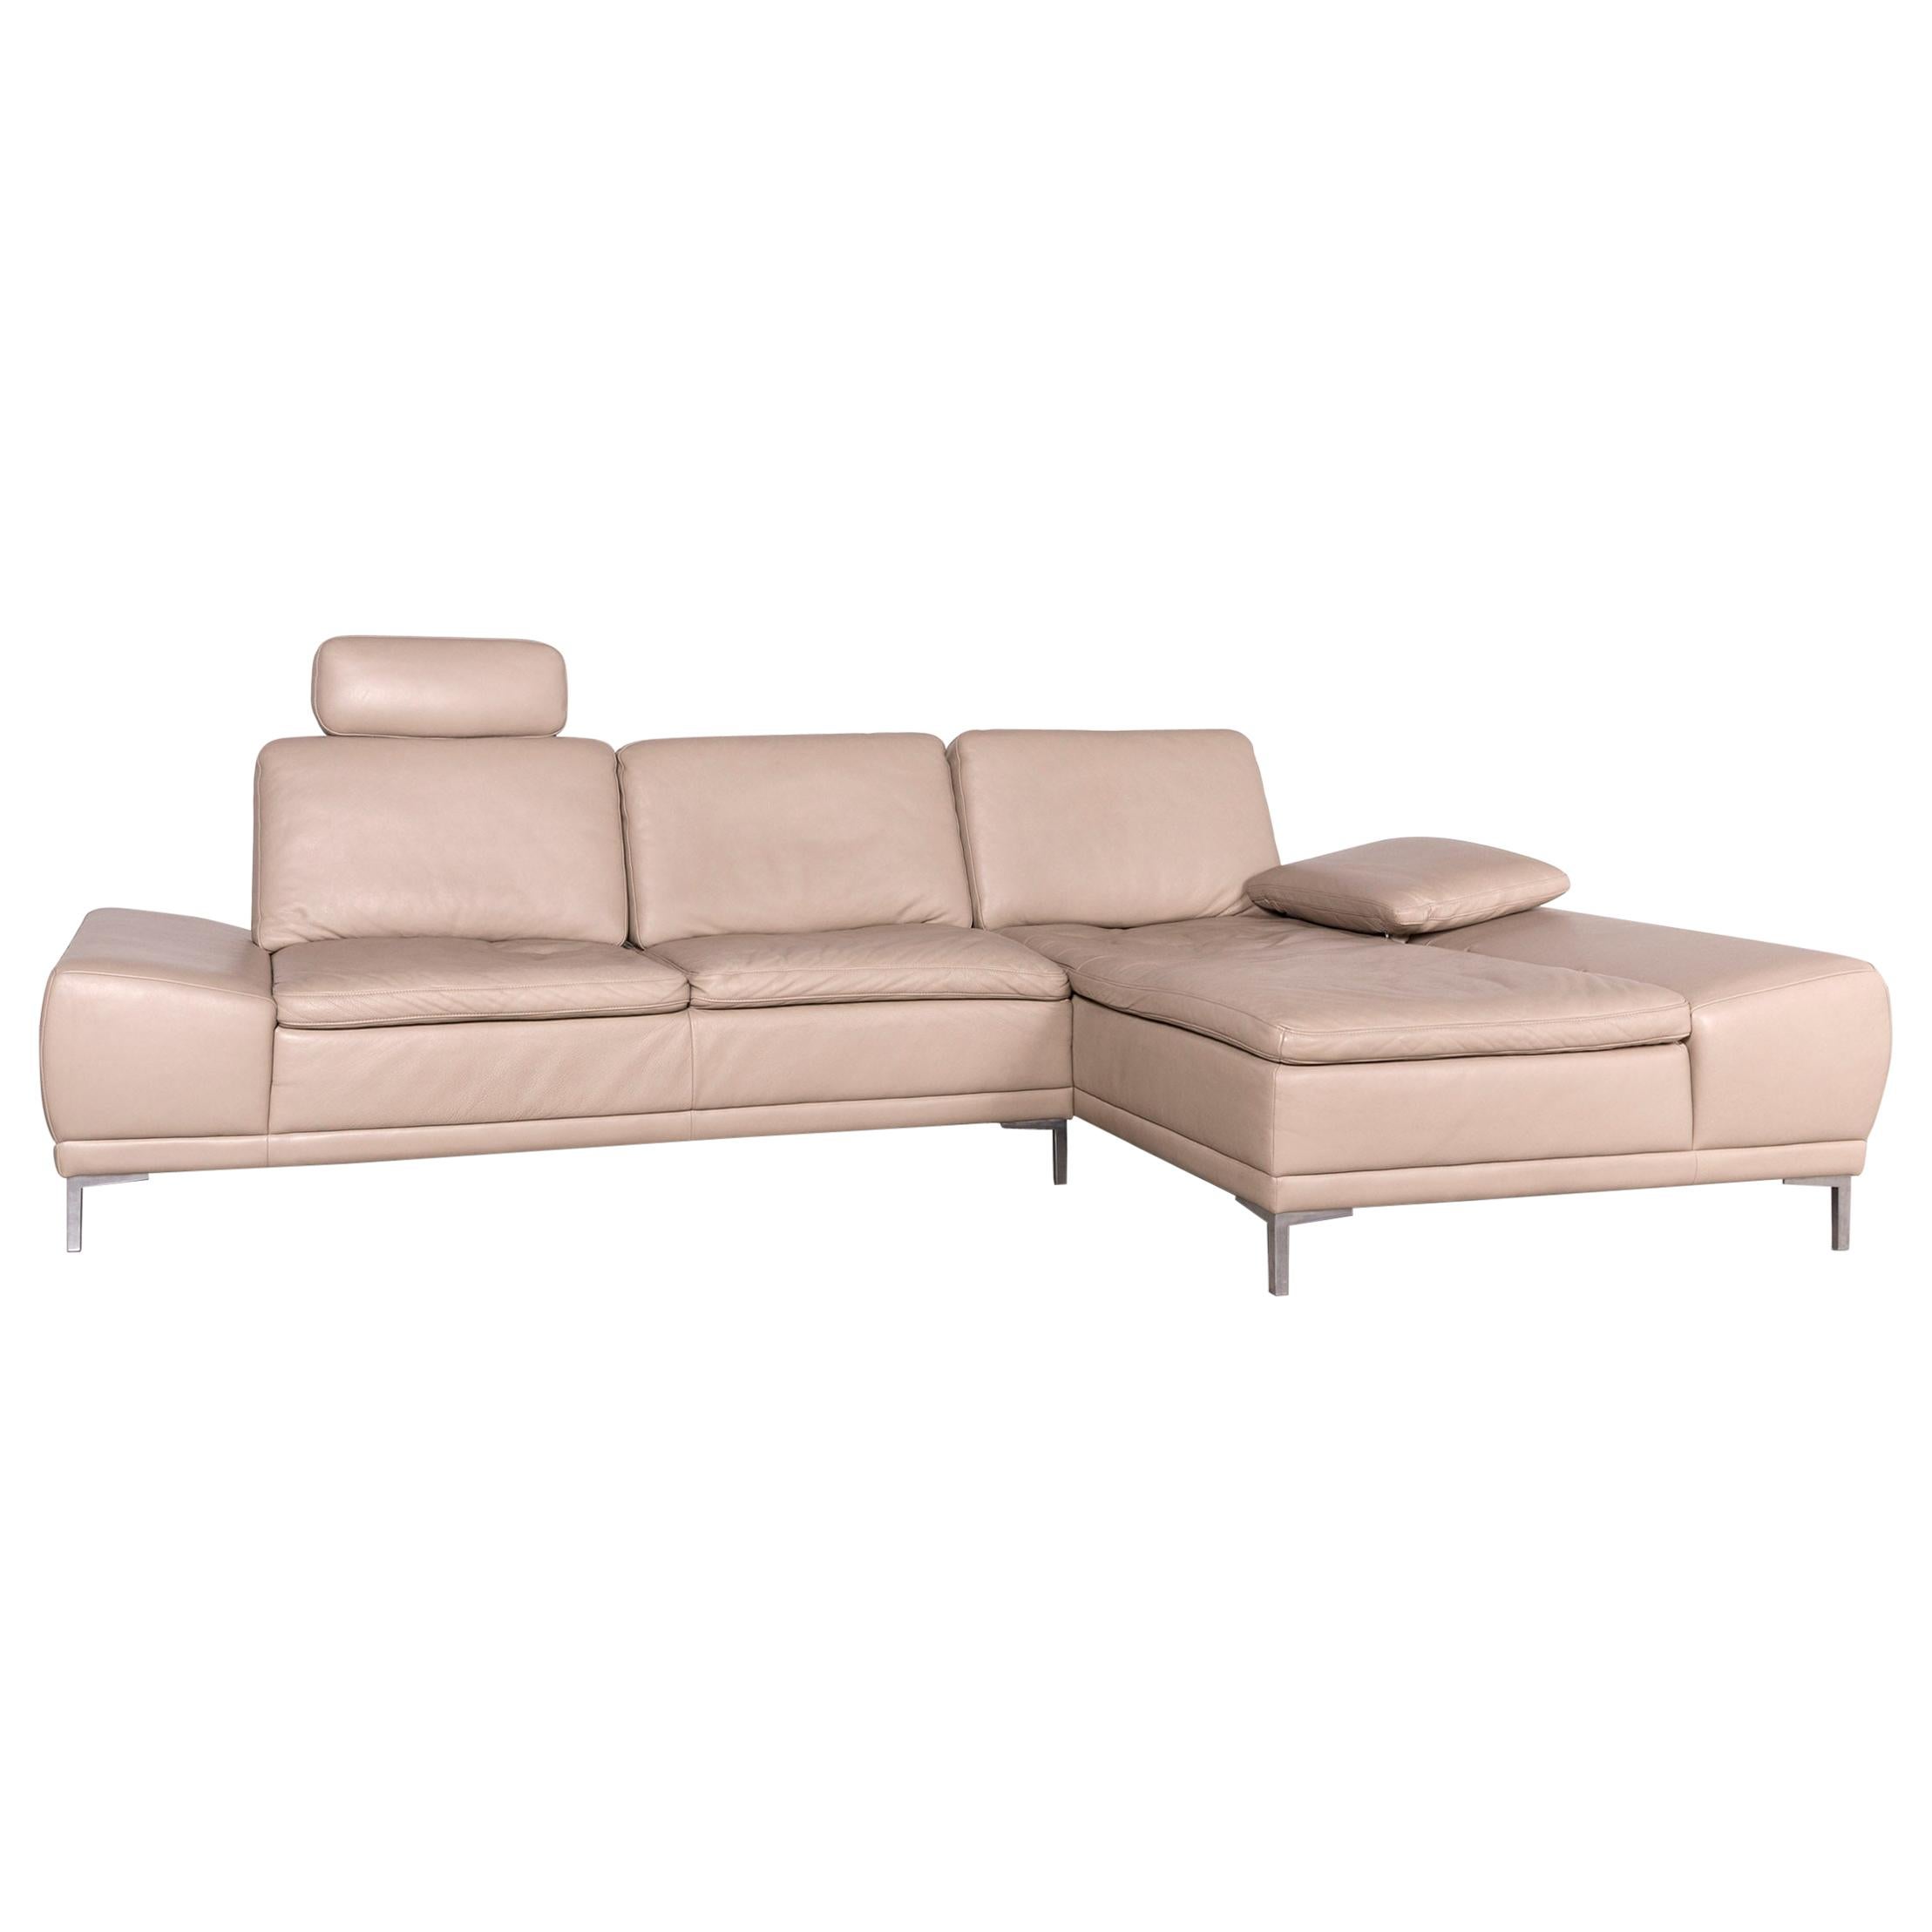 Willi Schillig Designer Leather Corner Sofa Beige Real Leather Sofa Couch For Sale